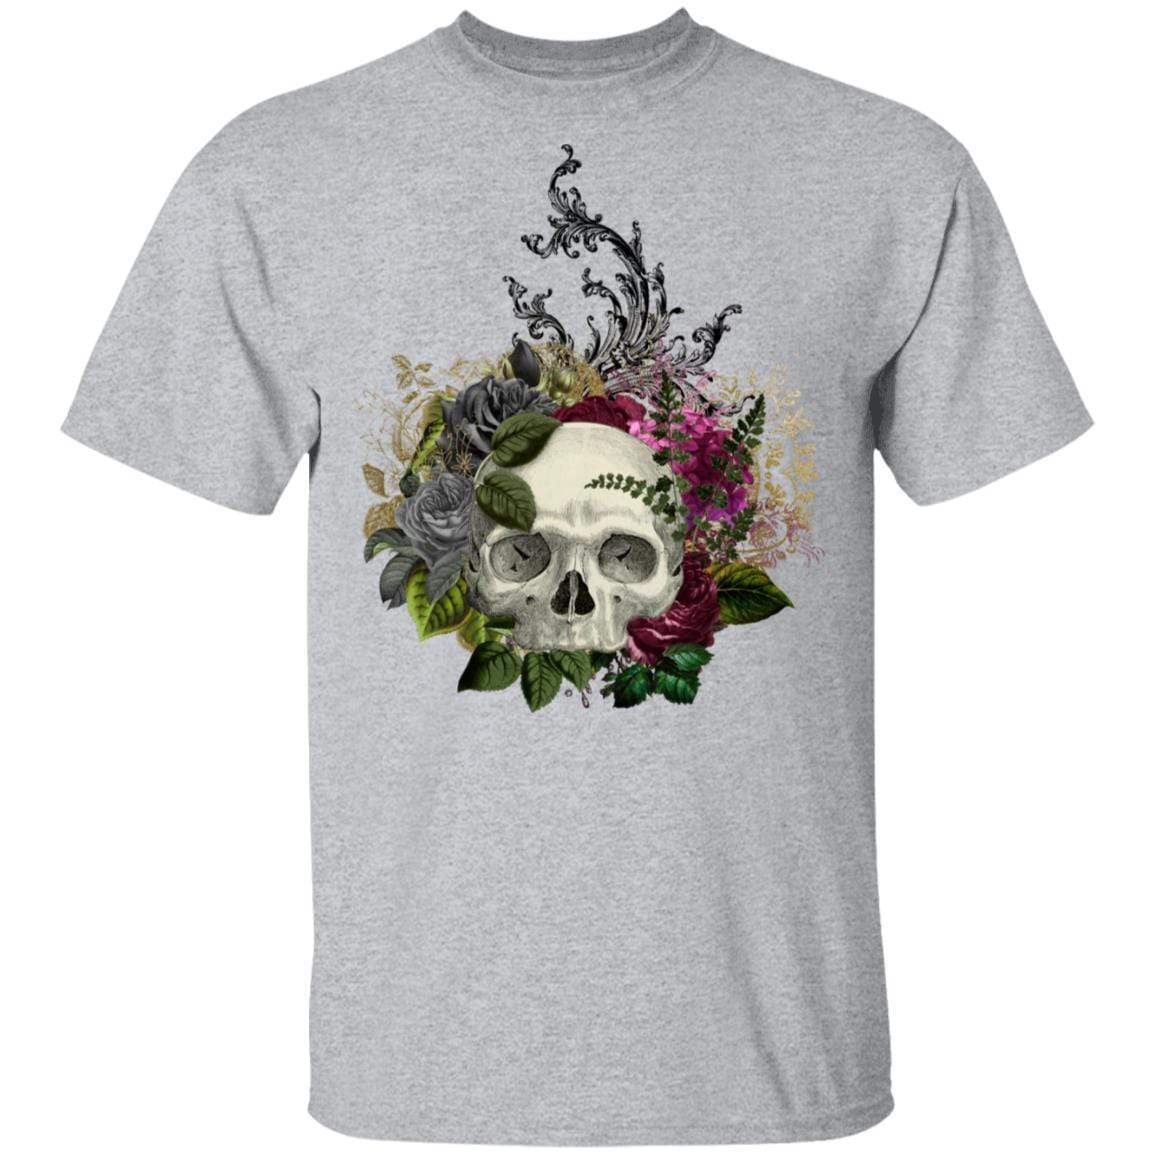 T-Shirts Sport Grey / S Winey Bitches Co Skull Design #1 5.3 oz. T-Shirt WineyBitchesCo